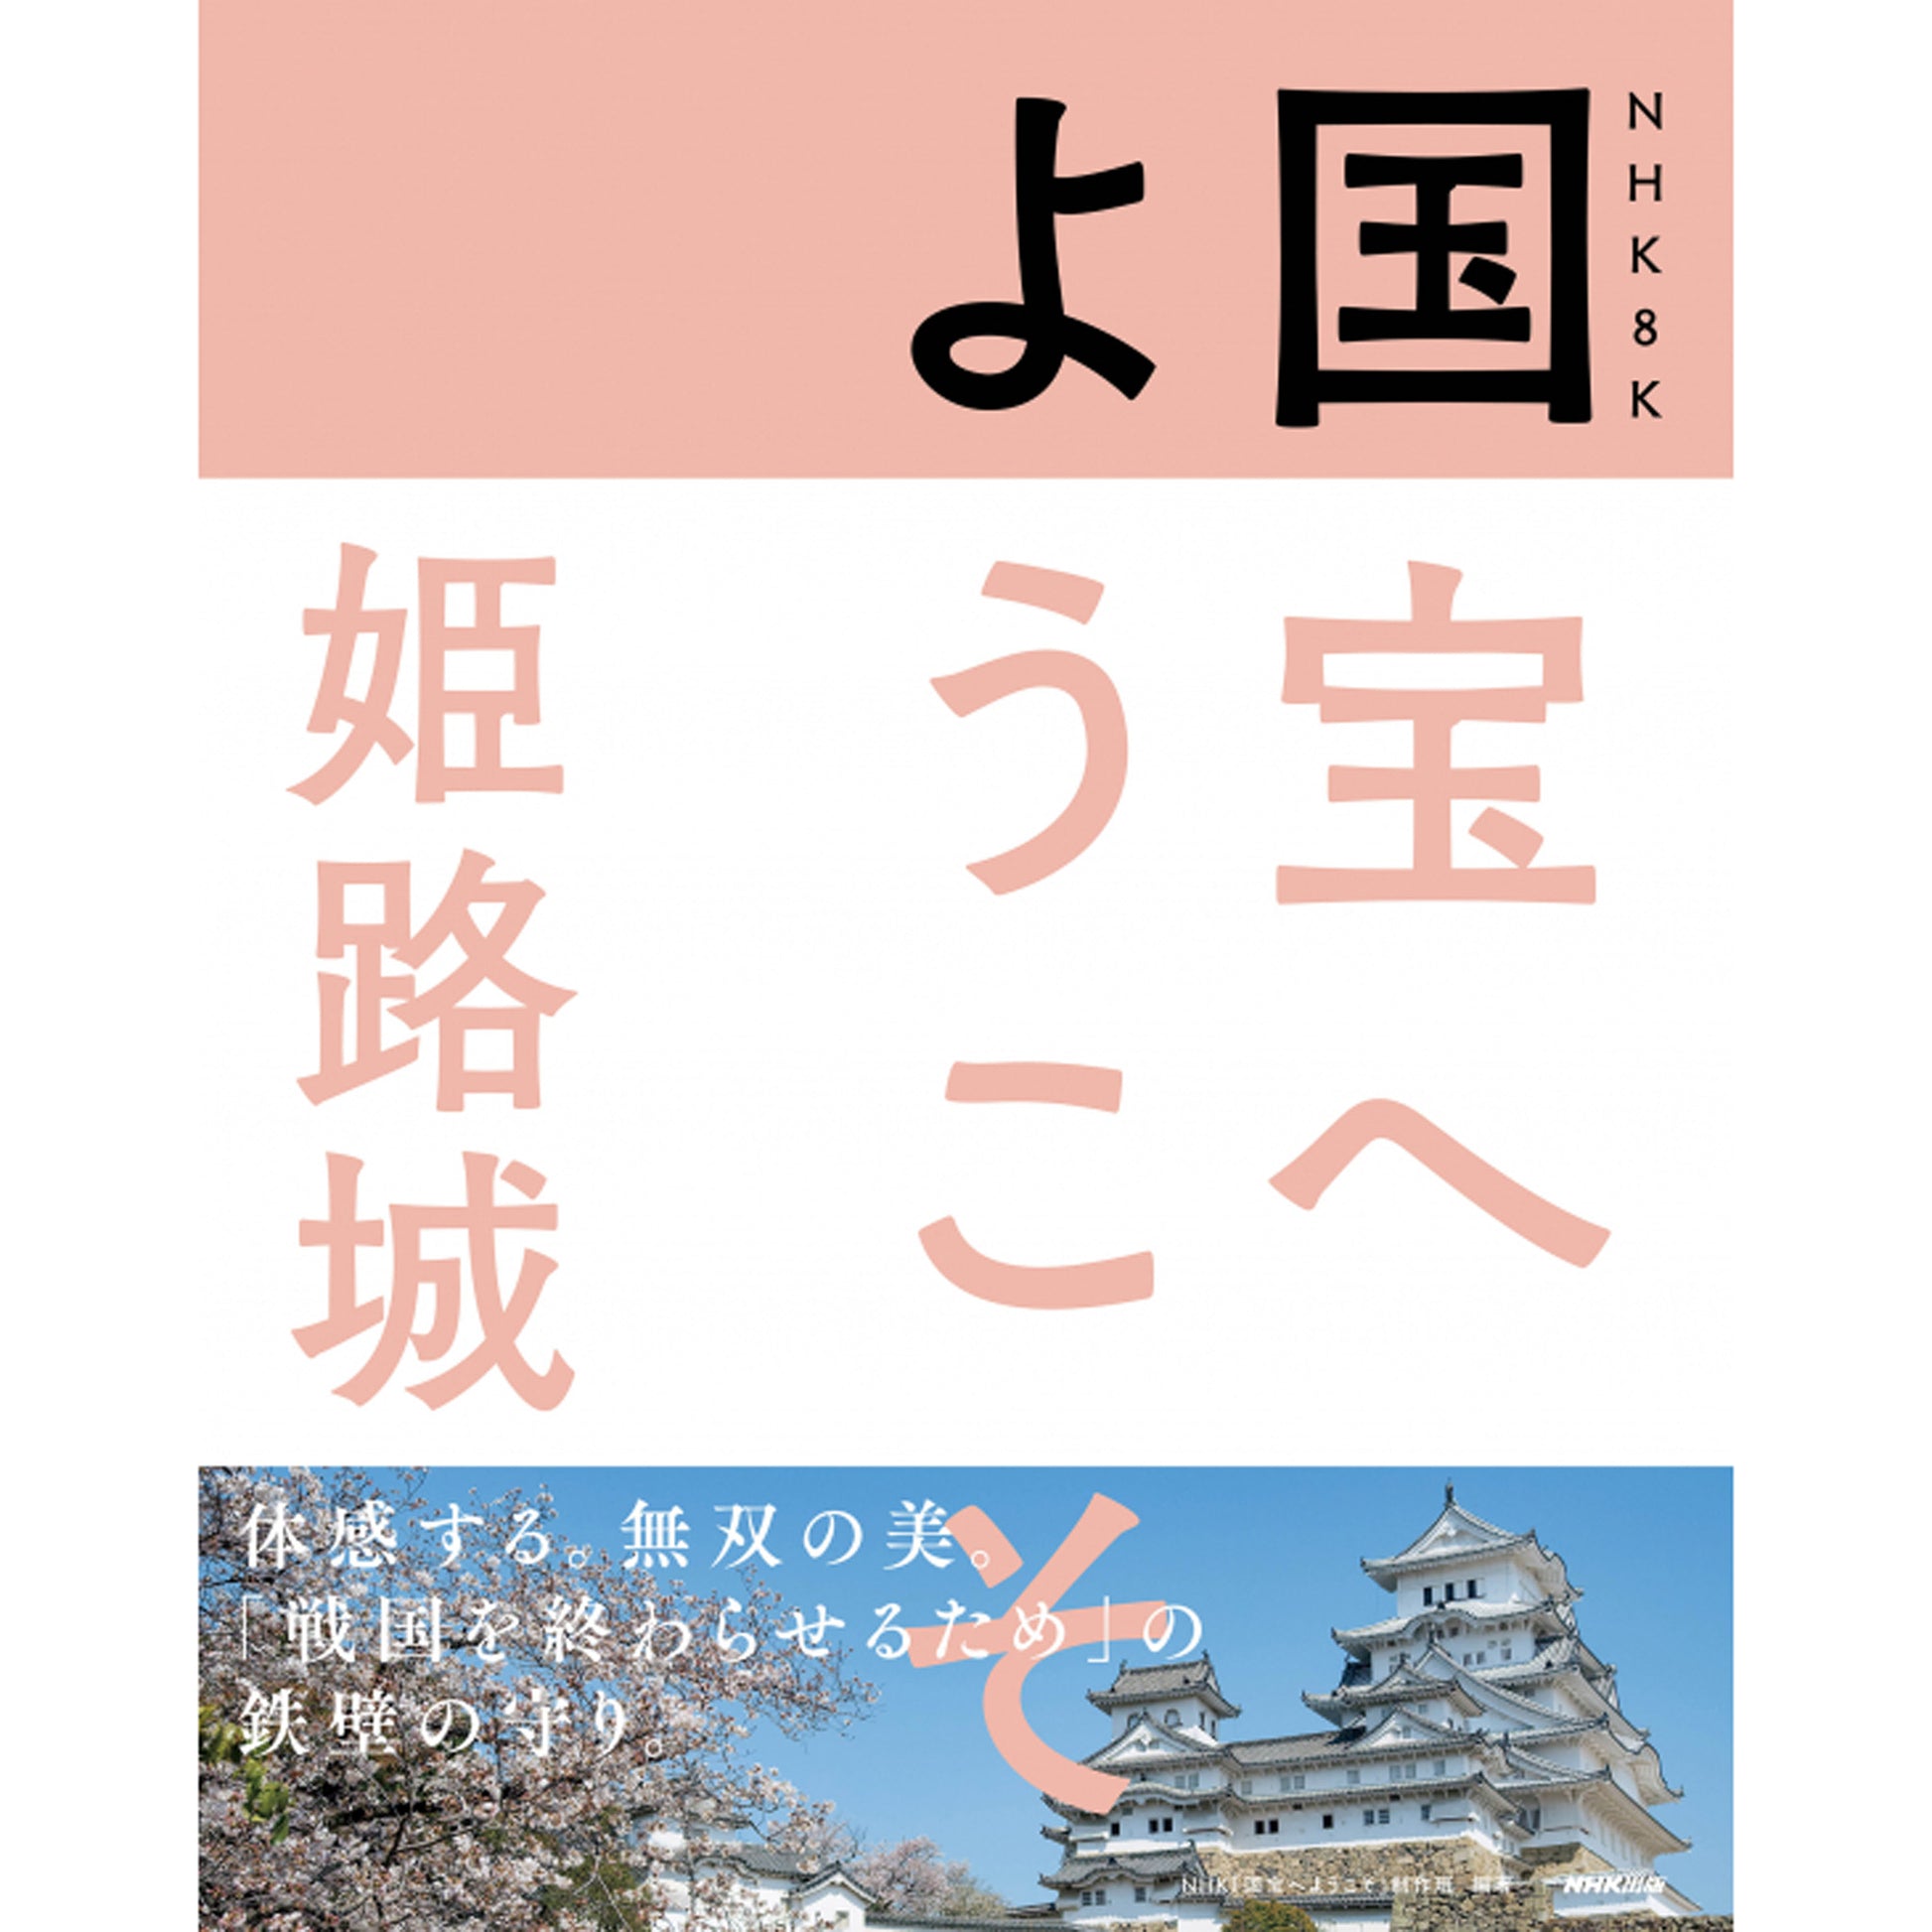 NHK８K 『国宝へようこそ 姫路城』- NHKグループ公式通販 - NHK